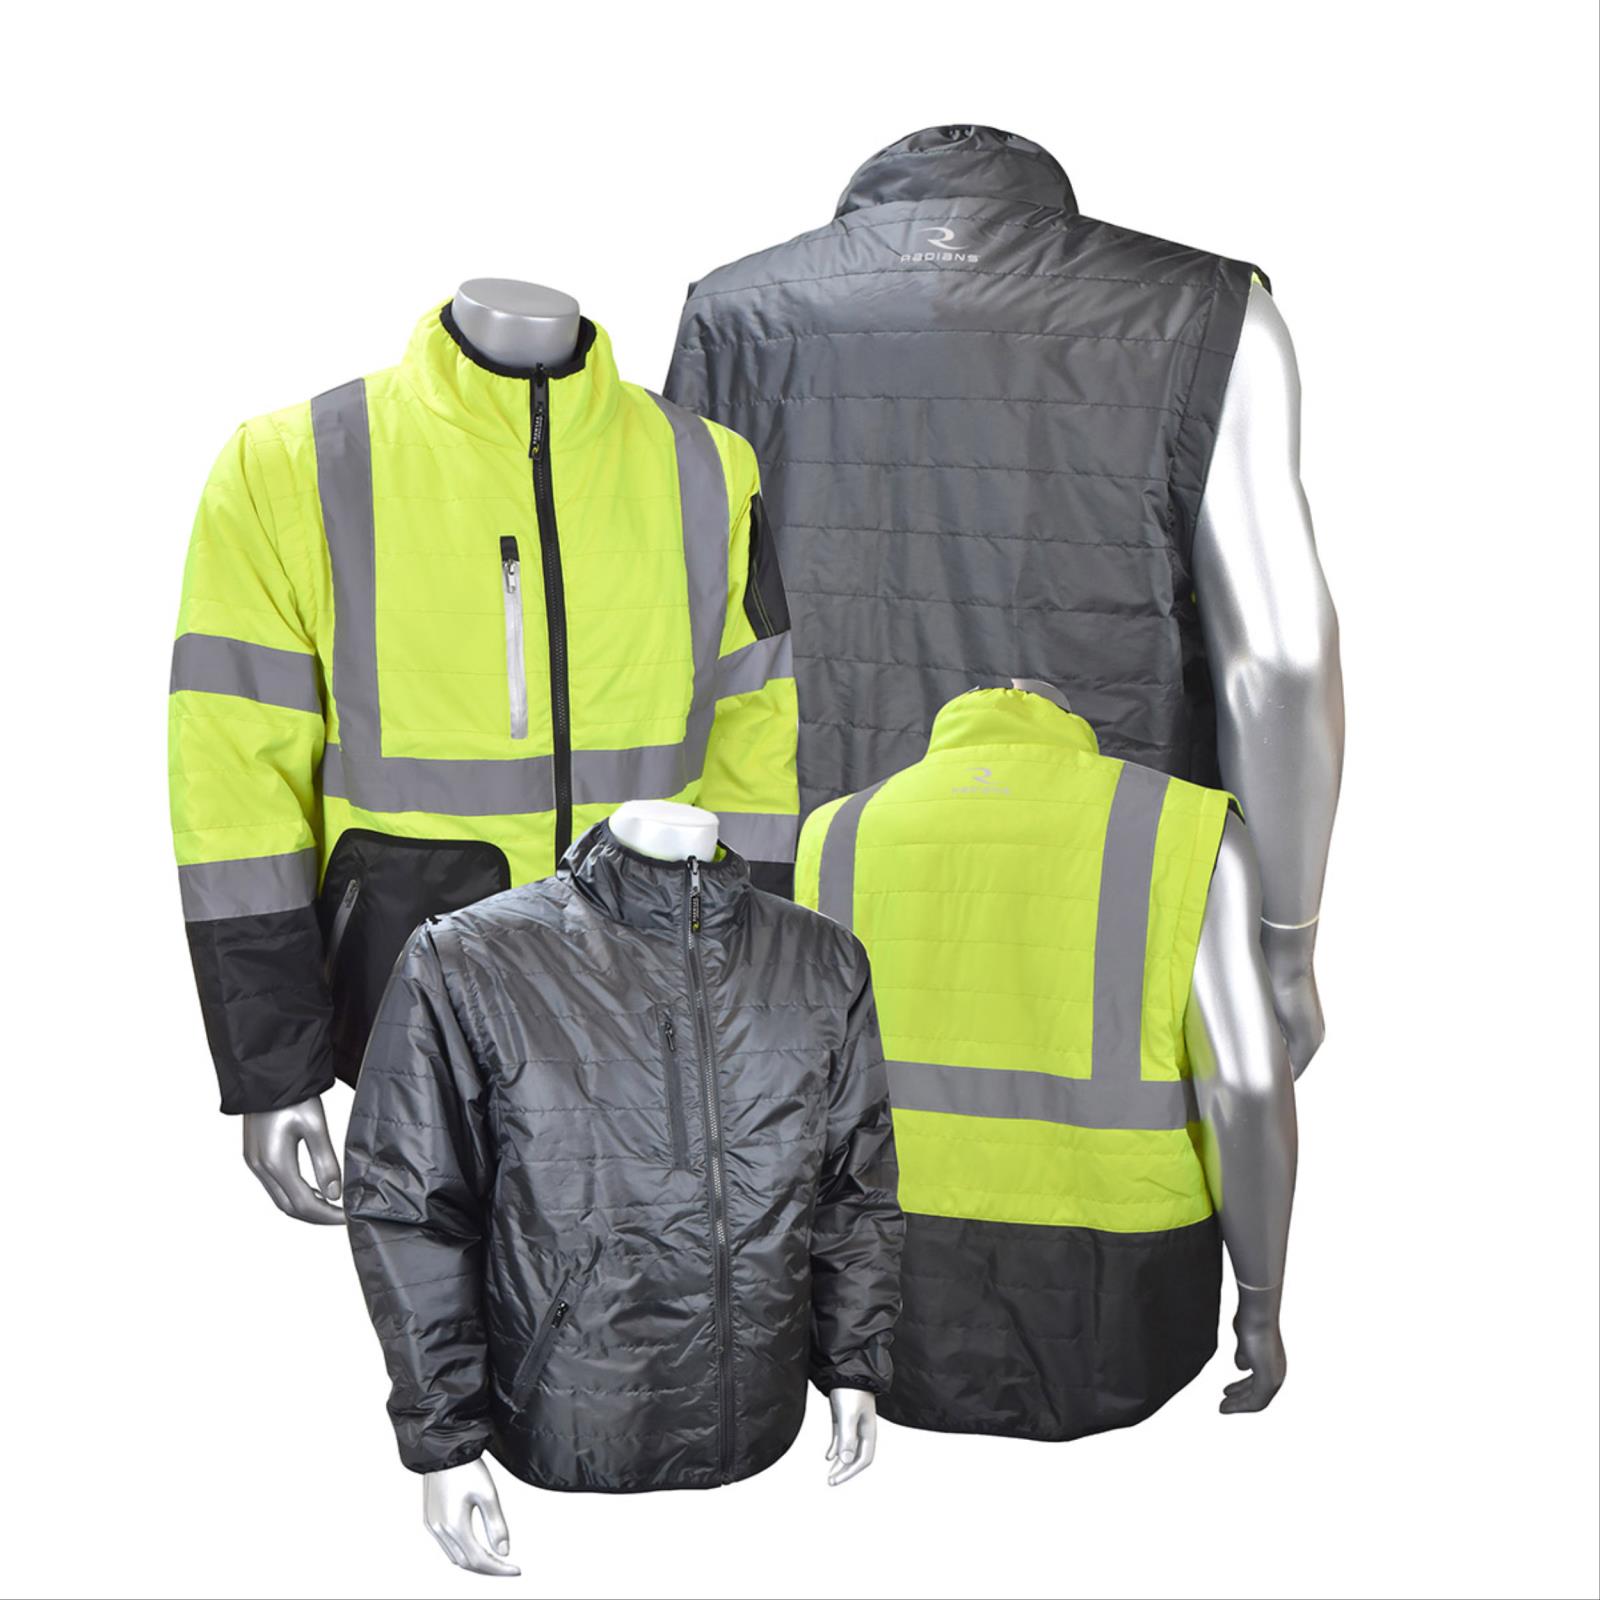 Radwear™ 4-N-1 Reversible Jacket, Zip-Off Sleeves, Class 3 Type R Jacket and Class 2 Vest